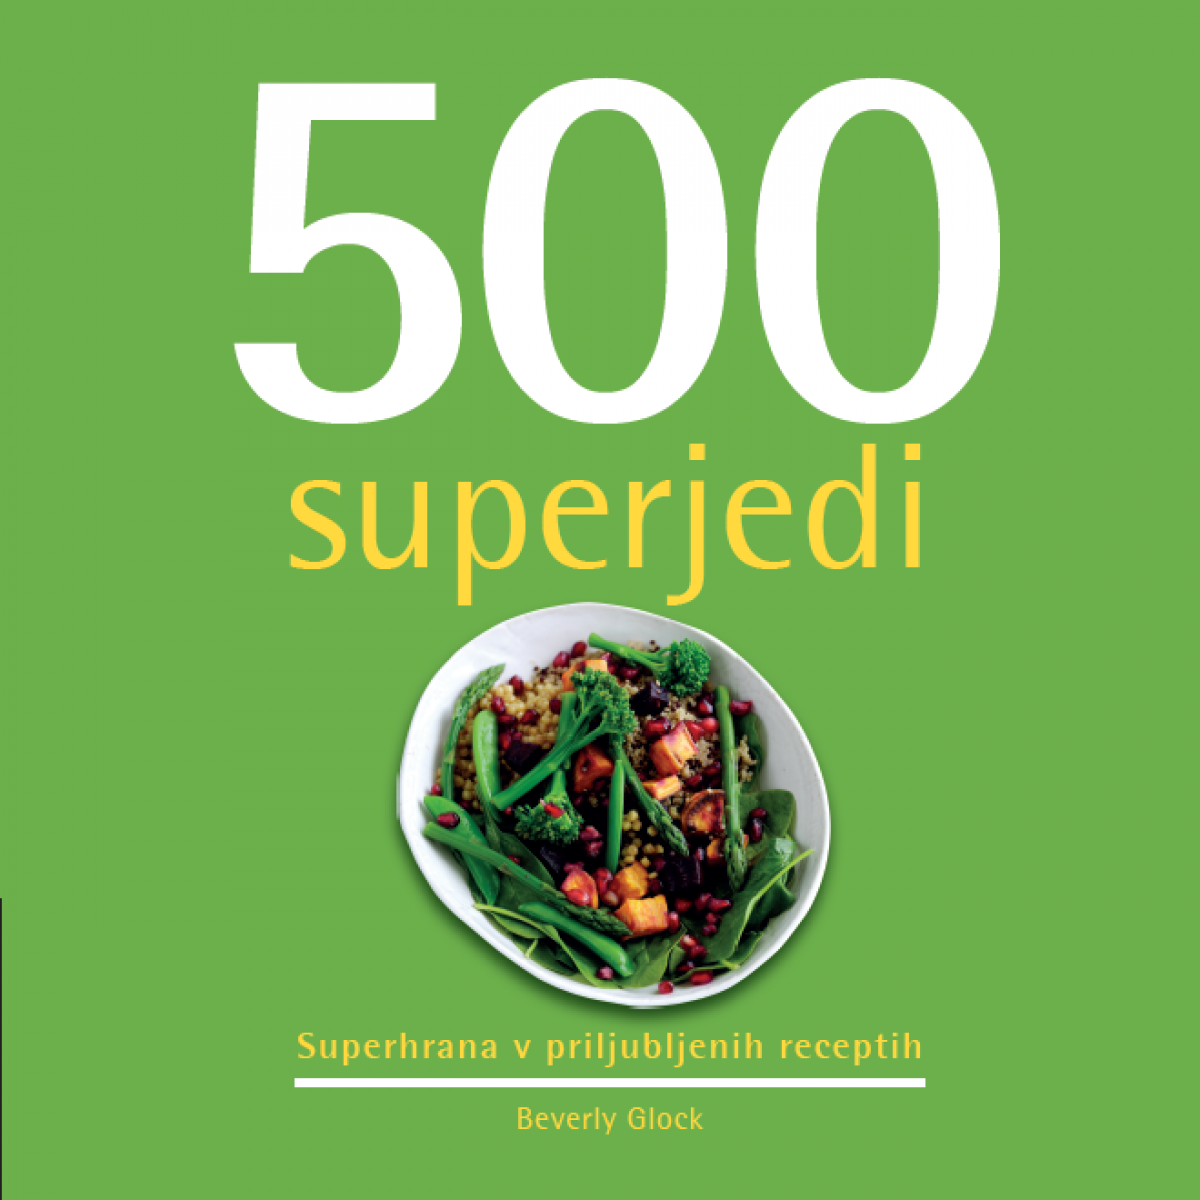 ﻿"500 superjedi"